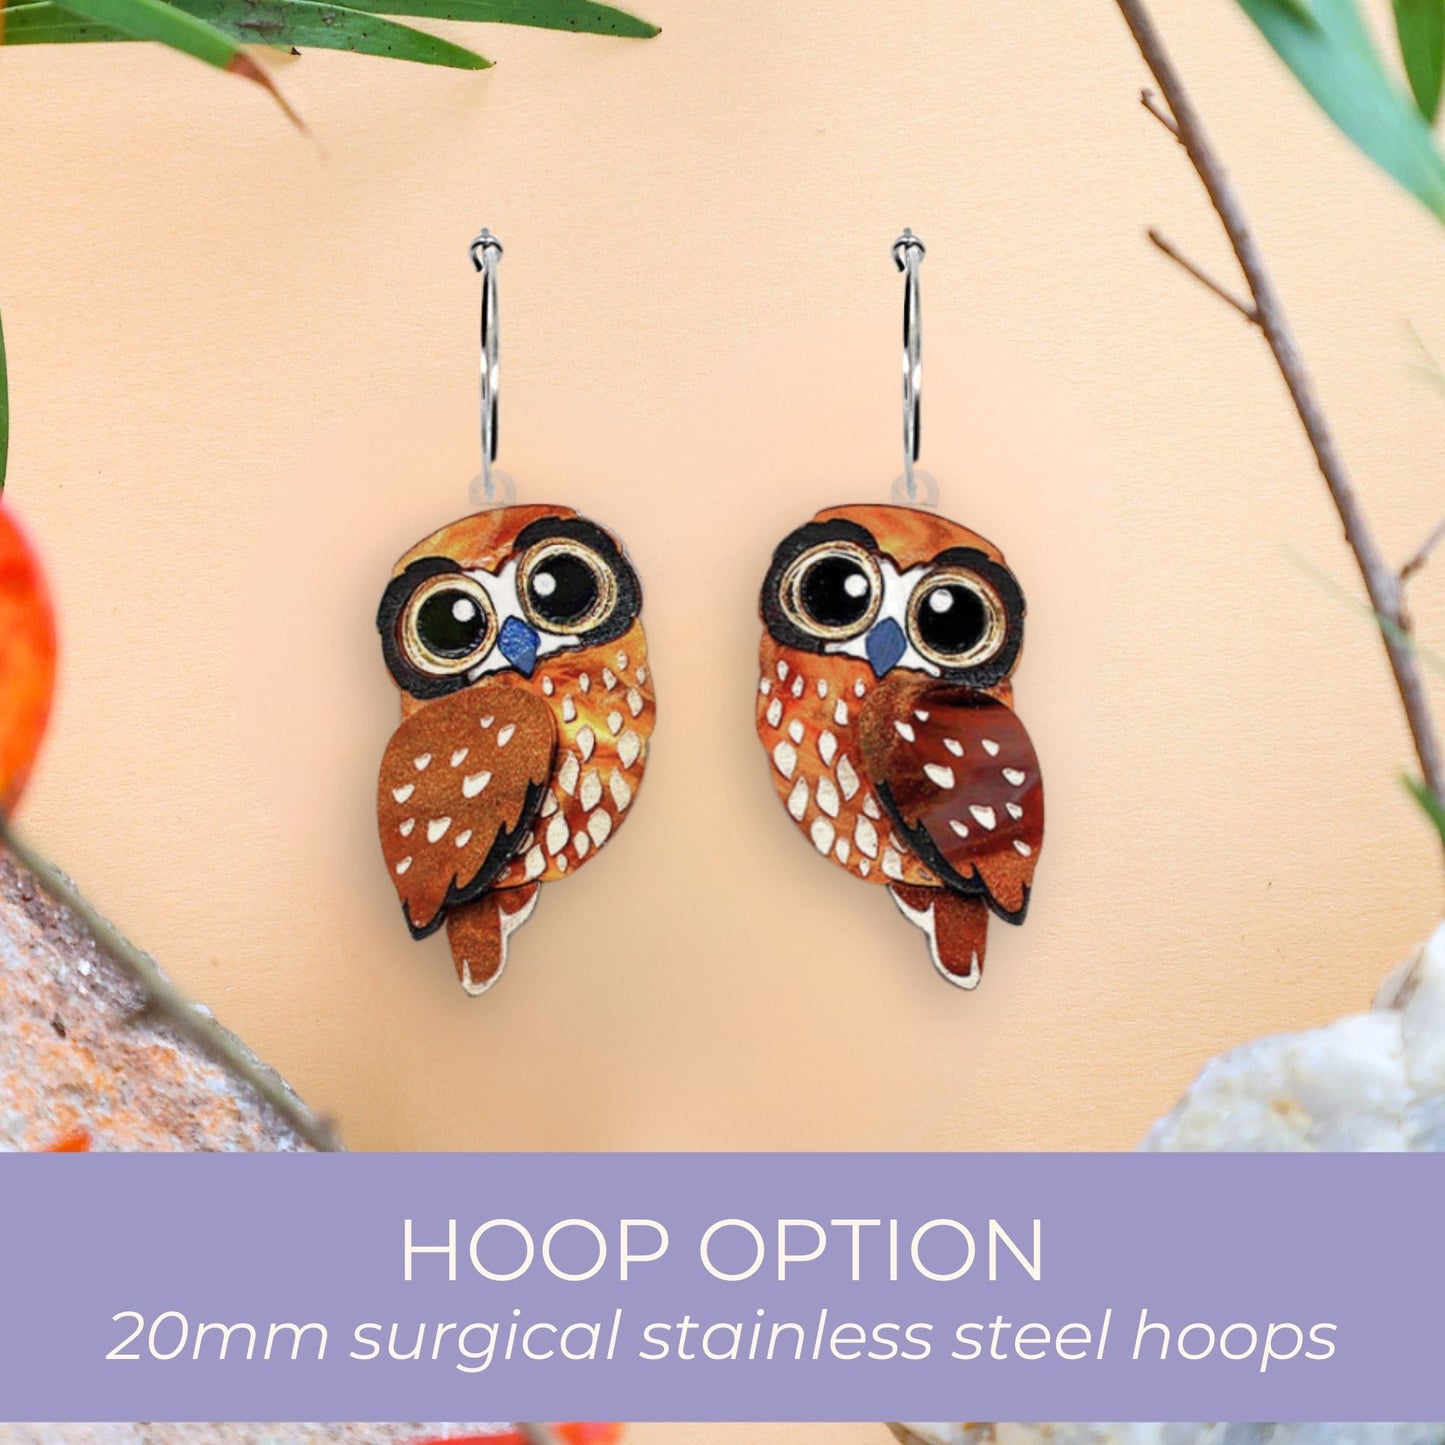 BINKABU Boobook Owl Acrylic Bird Earrings